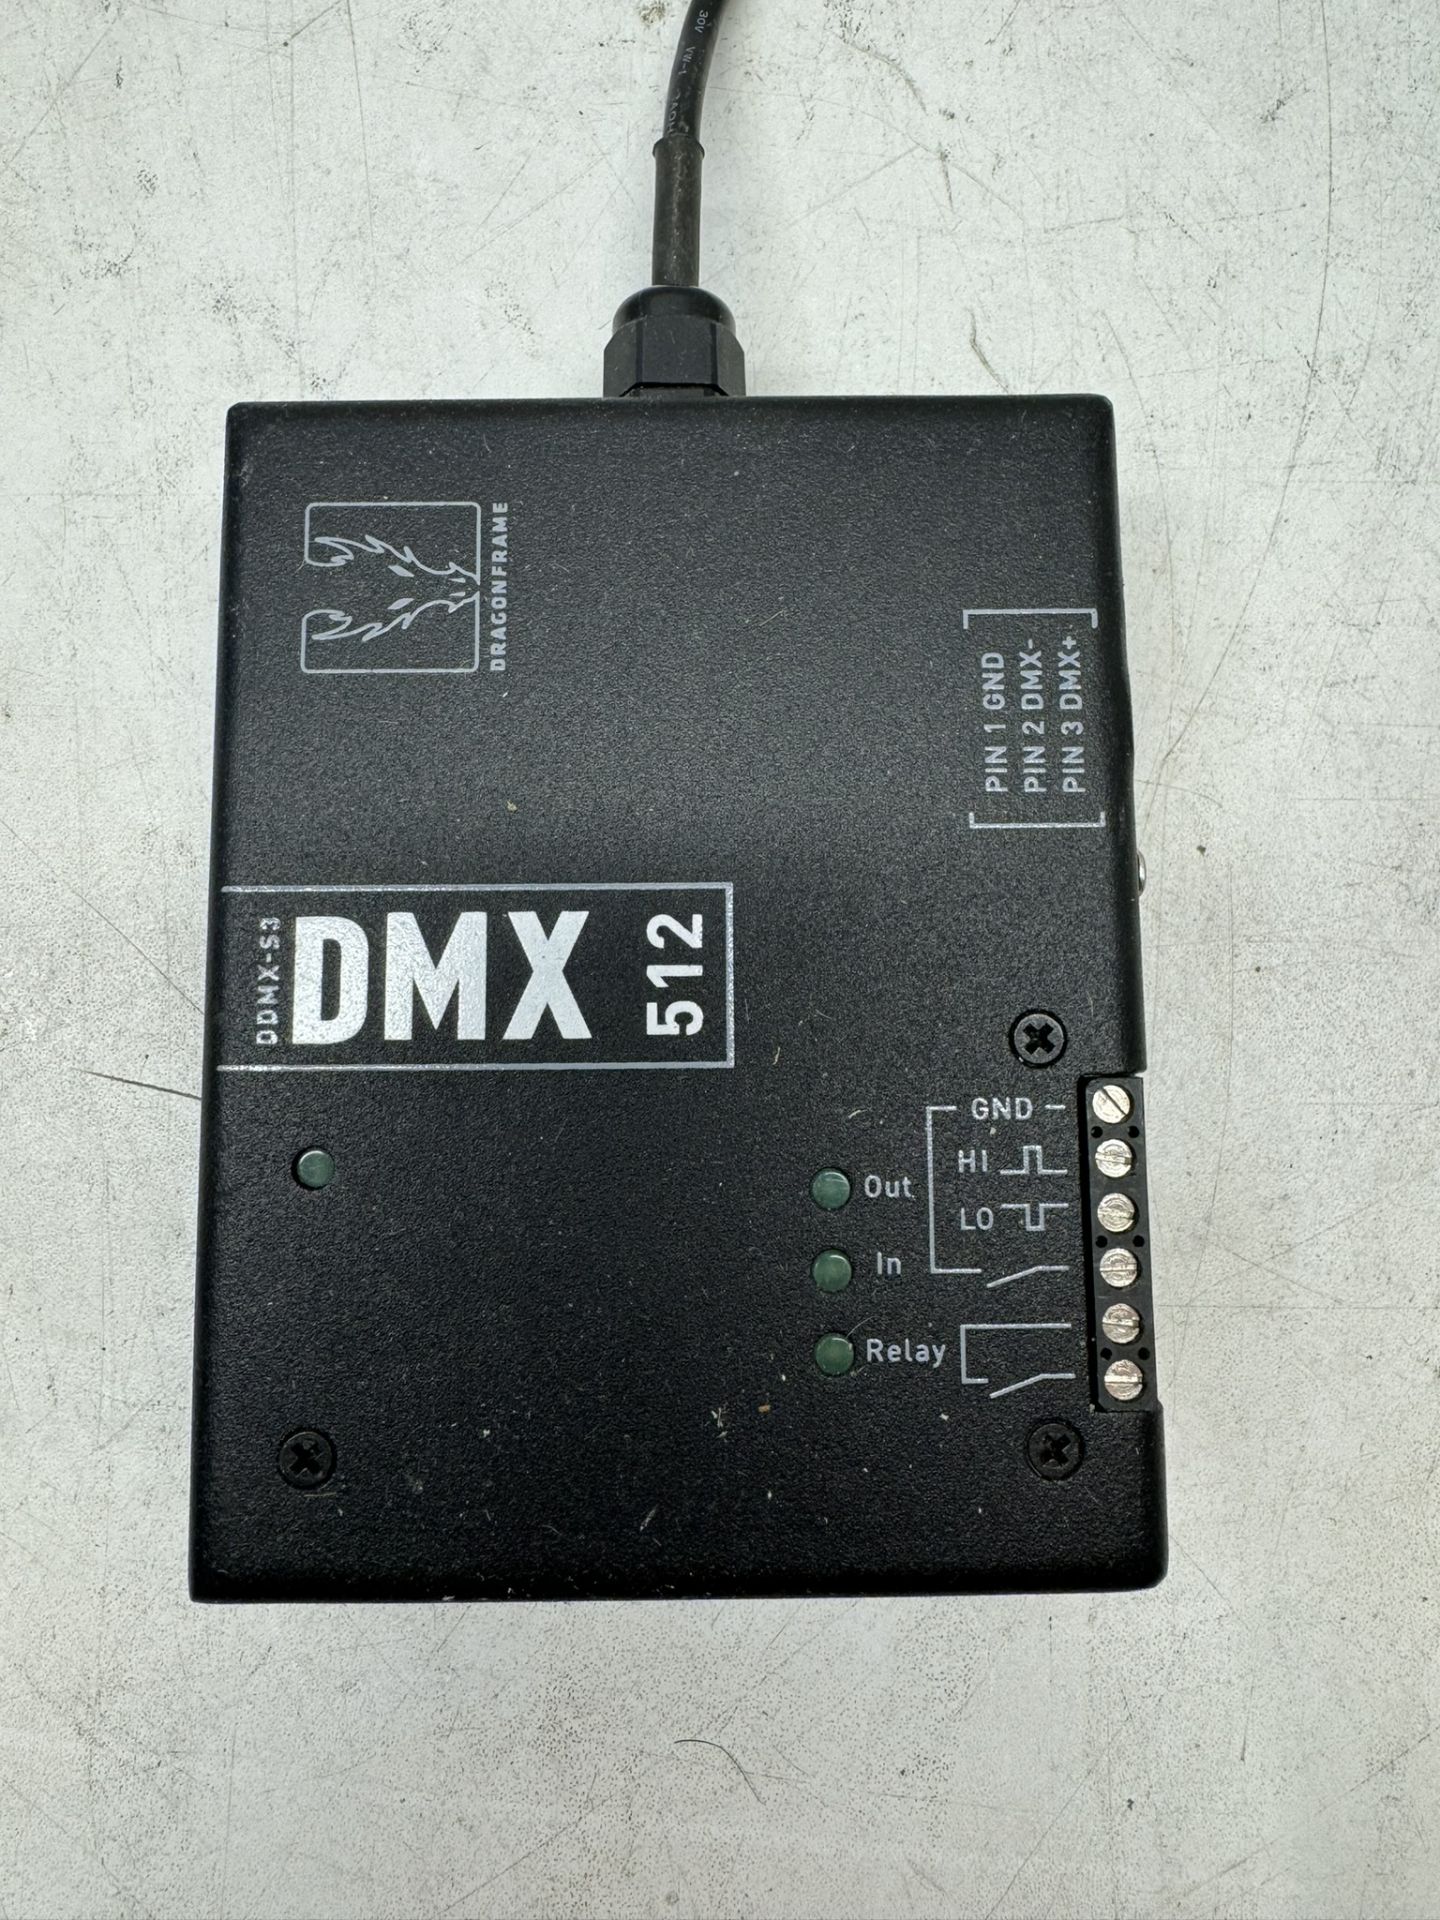 Dragonframe DMX 512 ADVANCED LIGHTING CONTROL - Image 3 of 3